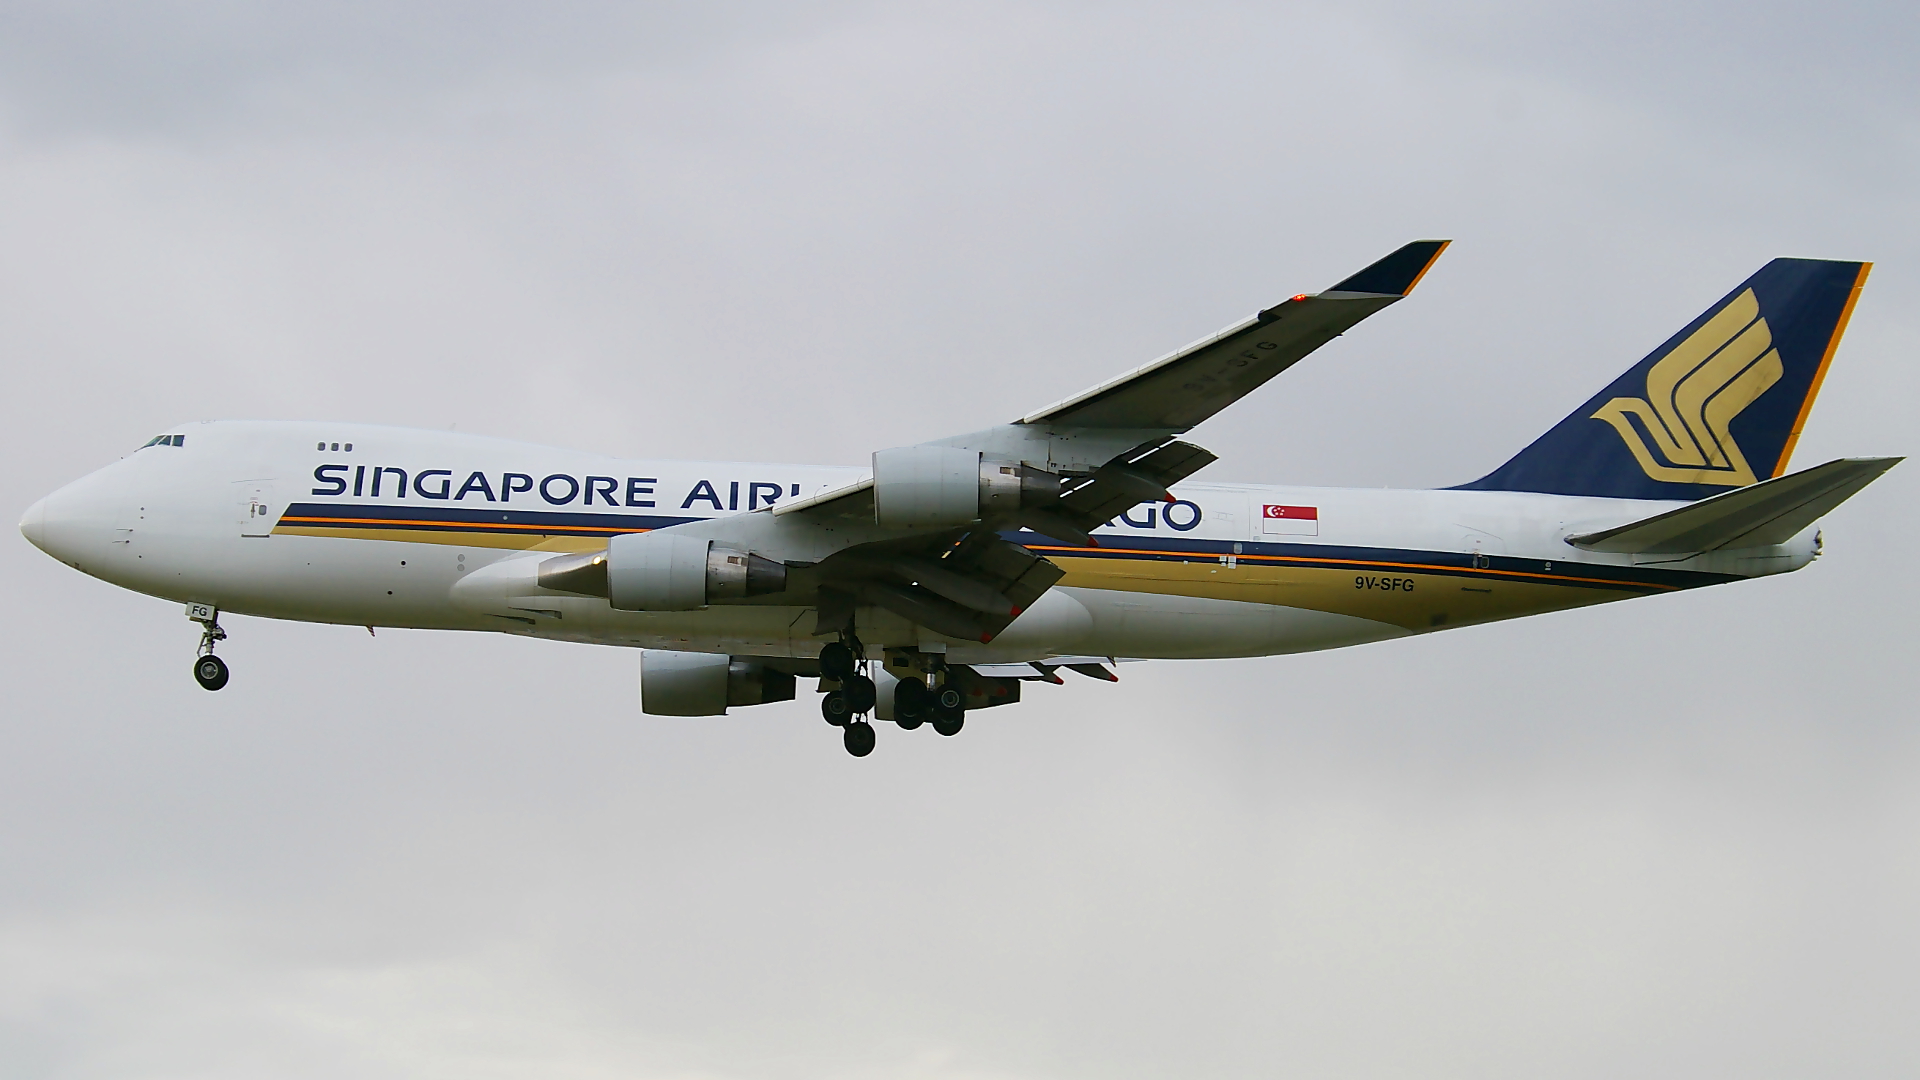 9V-SFG ✈ Singapore Airlines Cargo Boeing 747-412F @ London-Heathrow